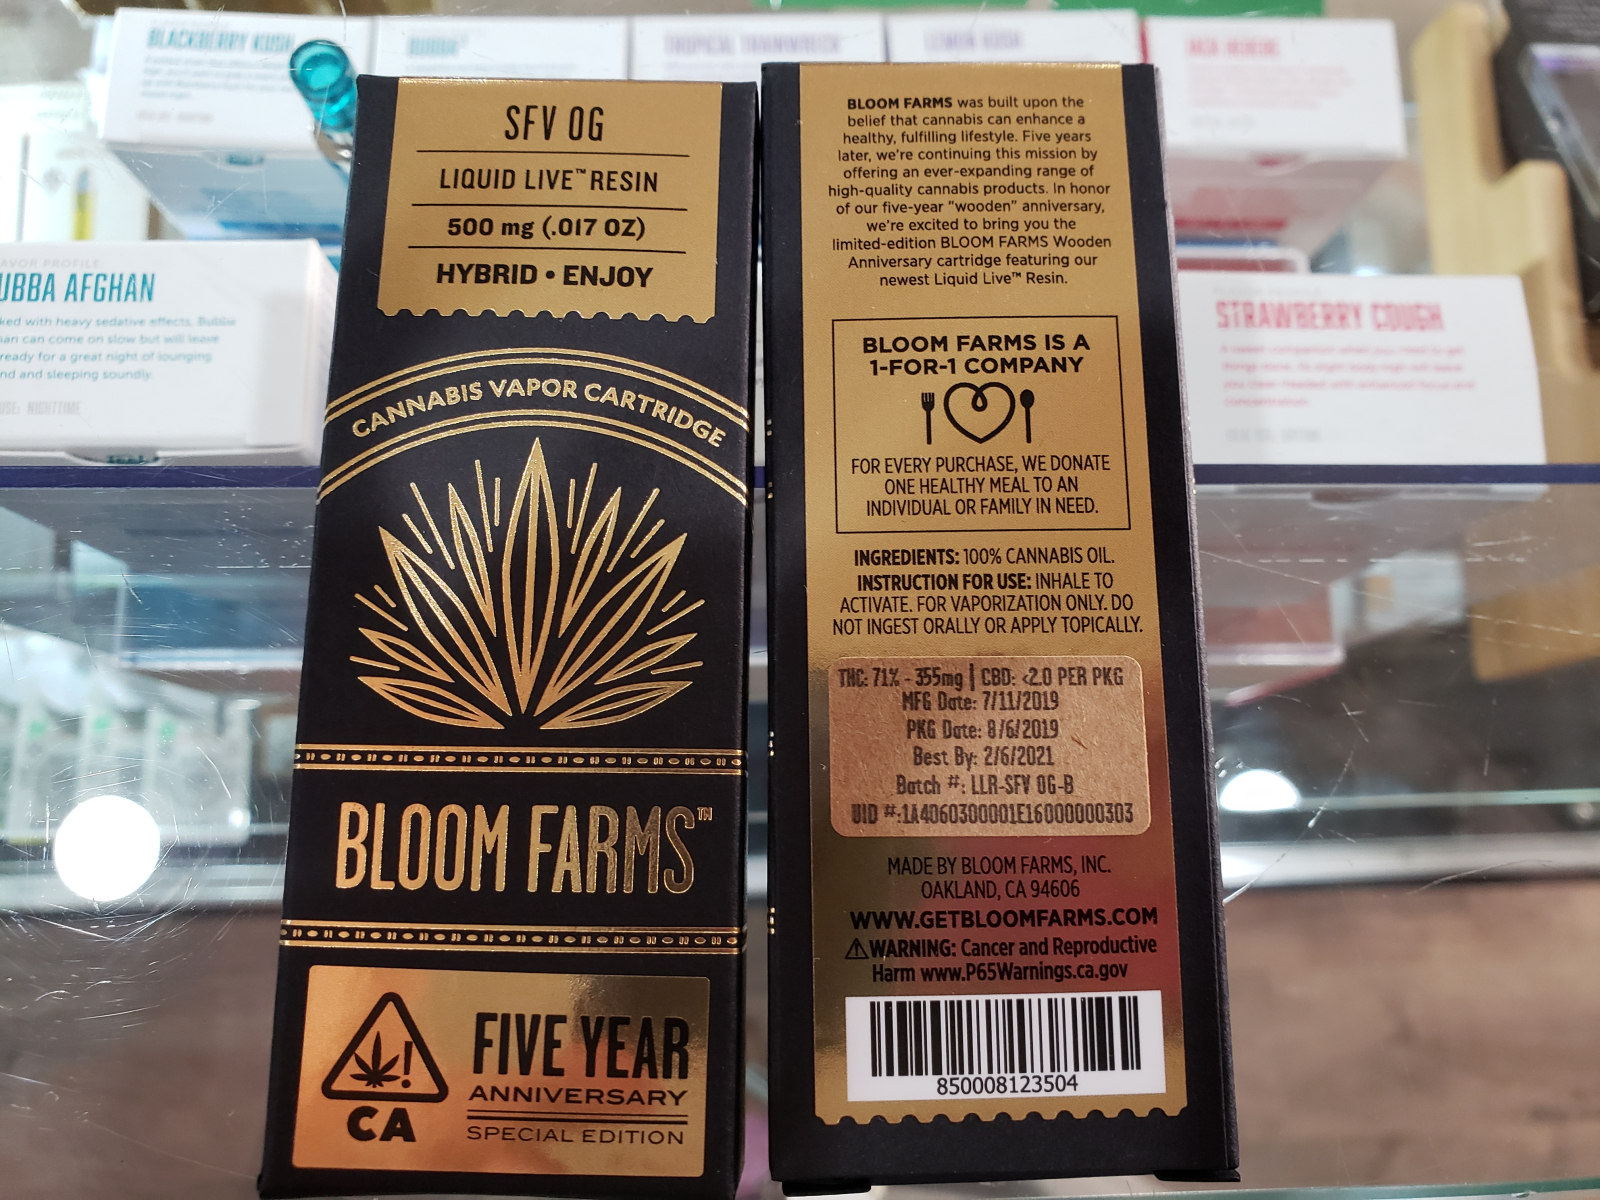 Bloom farms SFV OG love resin cartridge half gram